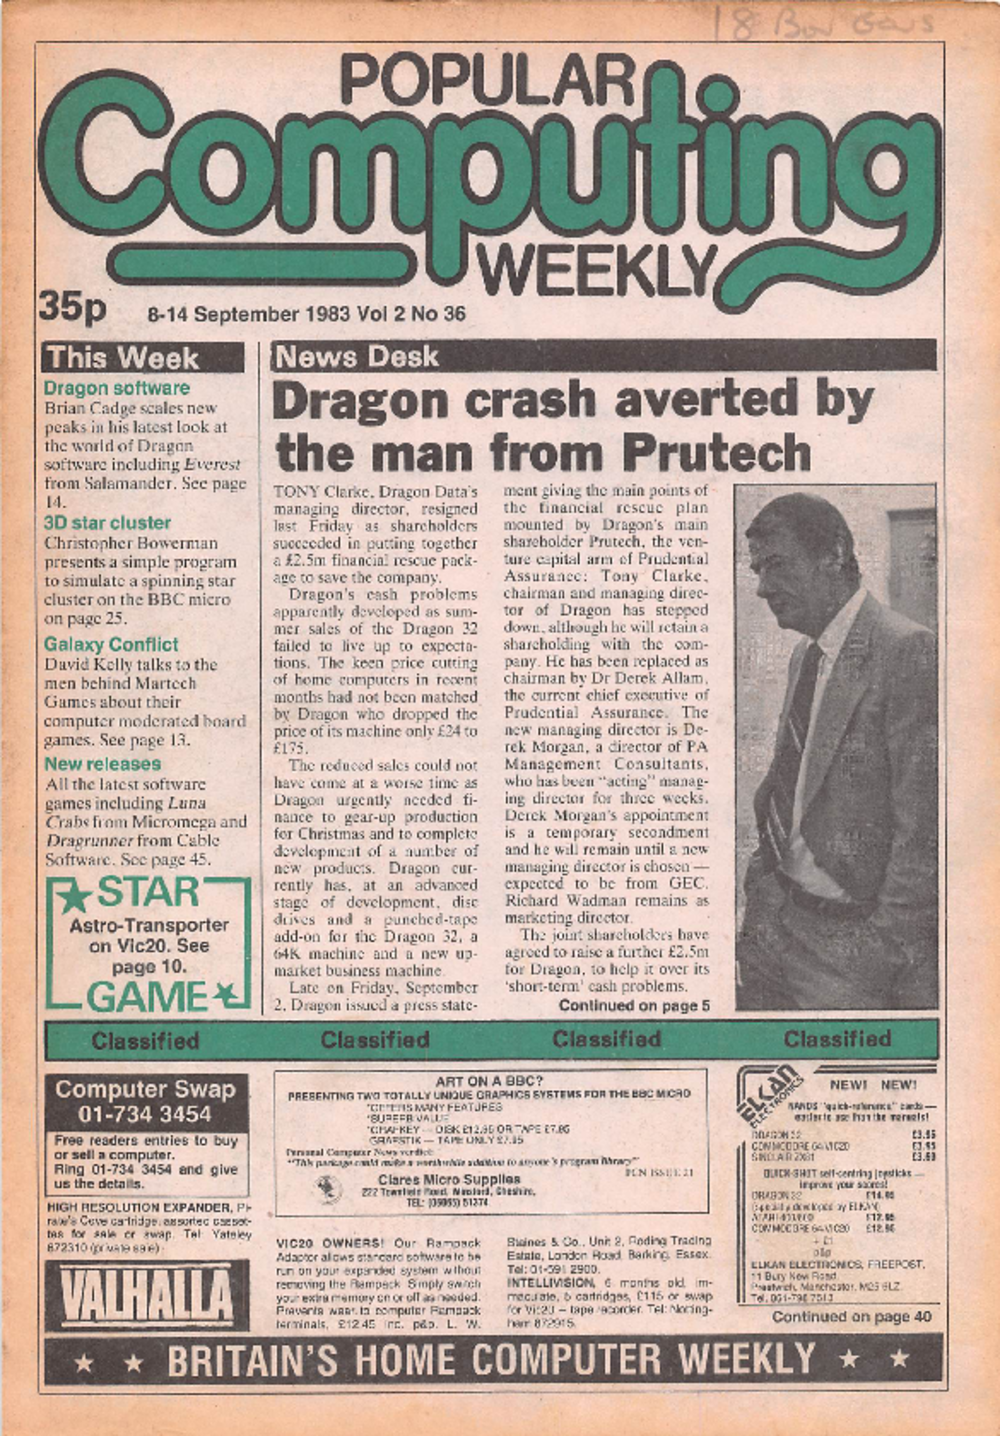 Article: Popular Computing Weekly Vol 2 No 36 - 8-14 September 1983 